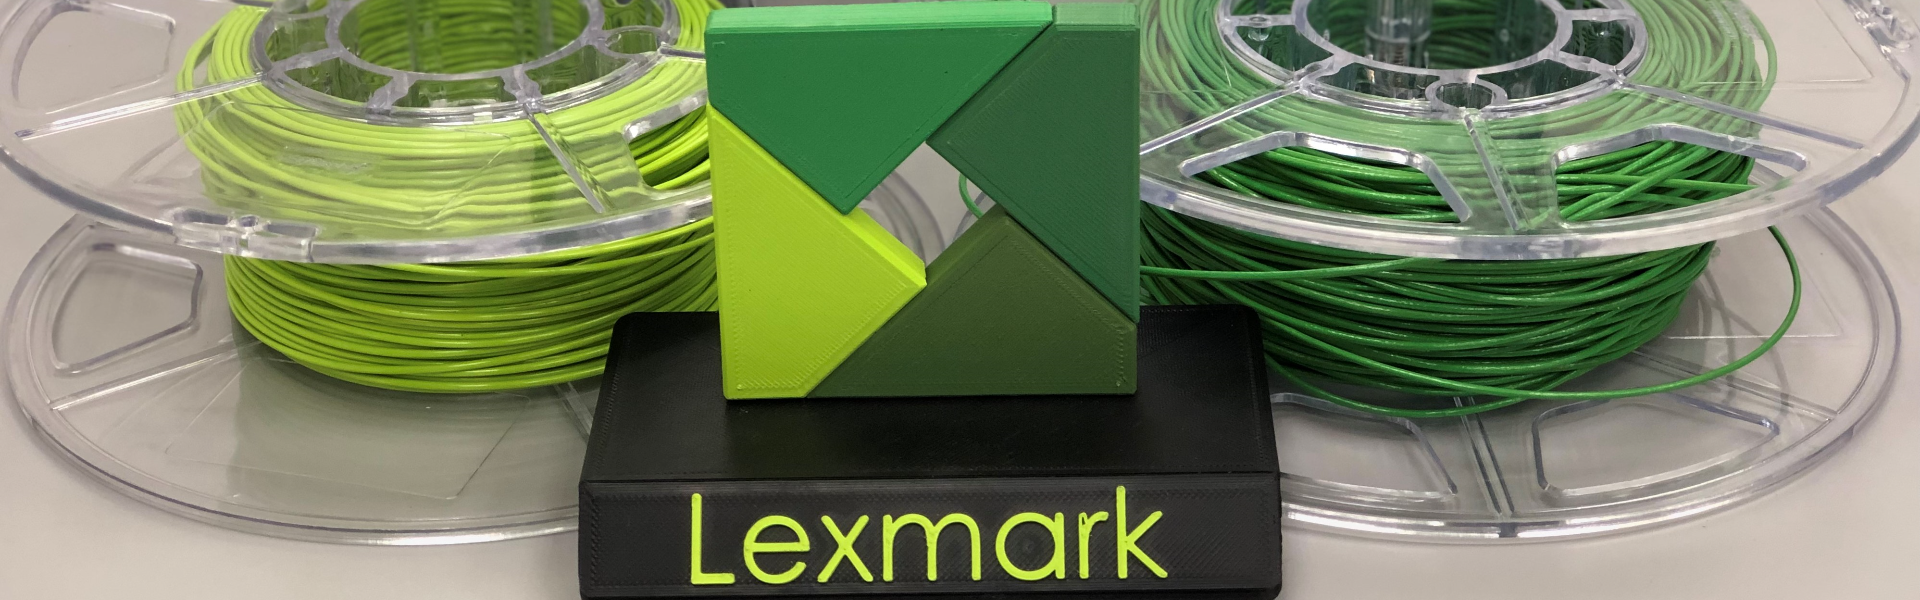 Lexmark reuses tons of plastic